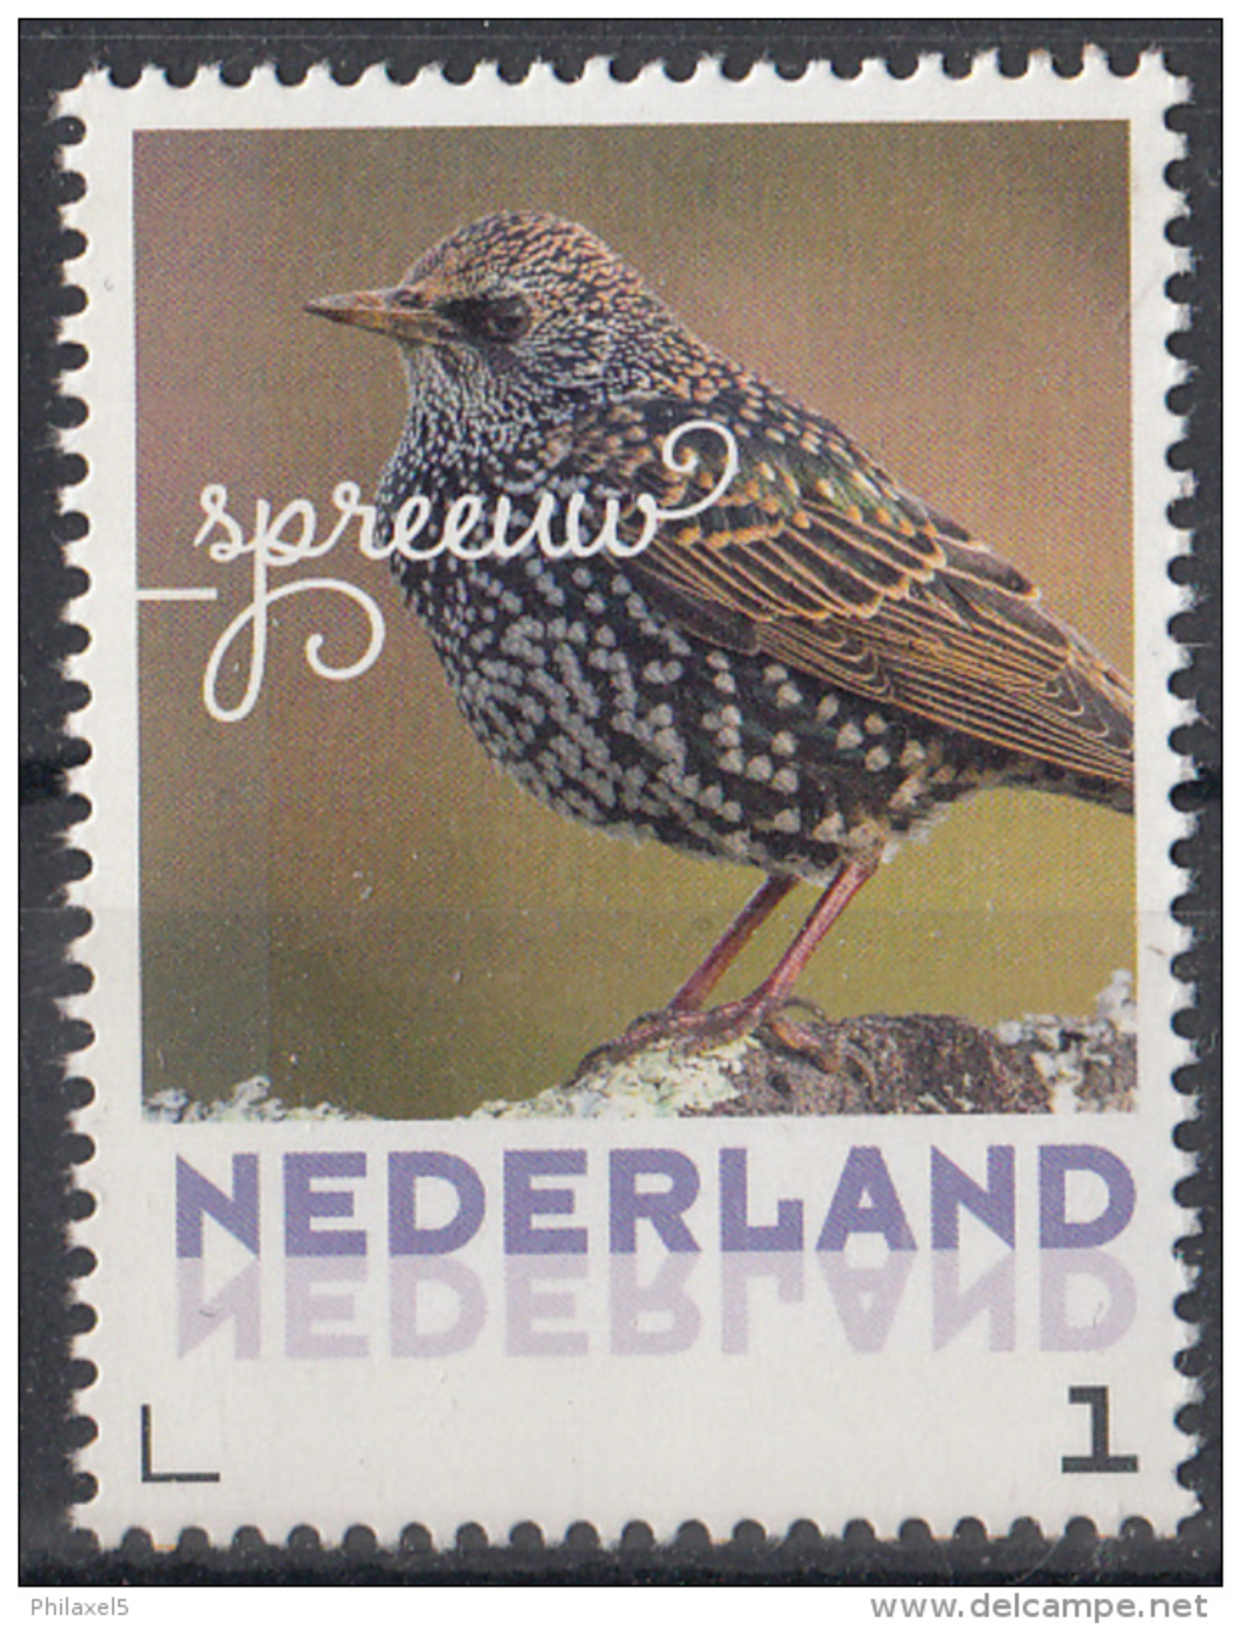 Nederland - September 2017 - Herfstvogels - Spreeuw - Vogels/birds/vögel/oiseaux - MNH - Zangvogels